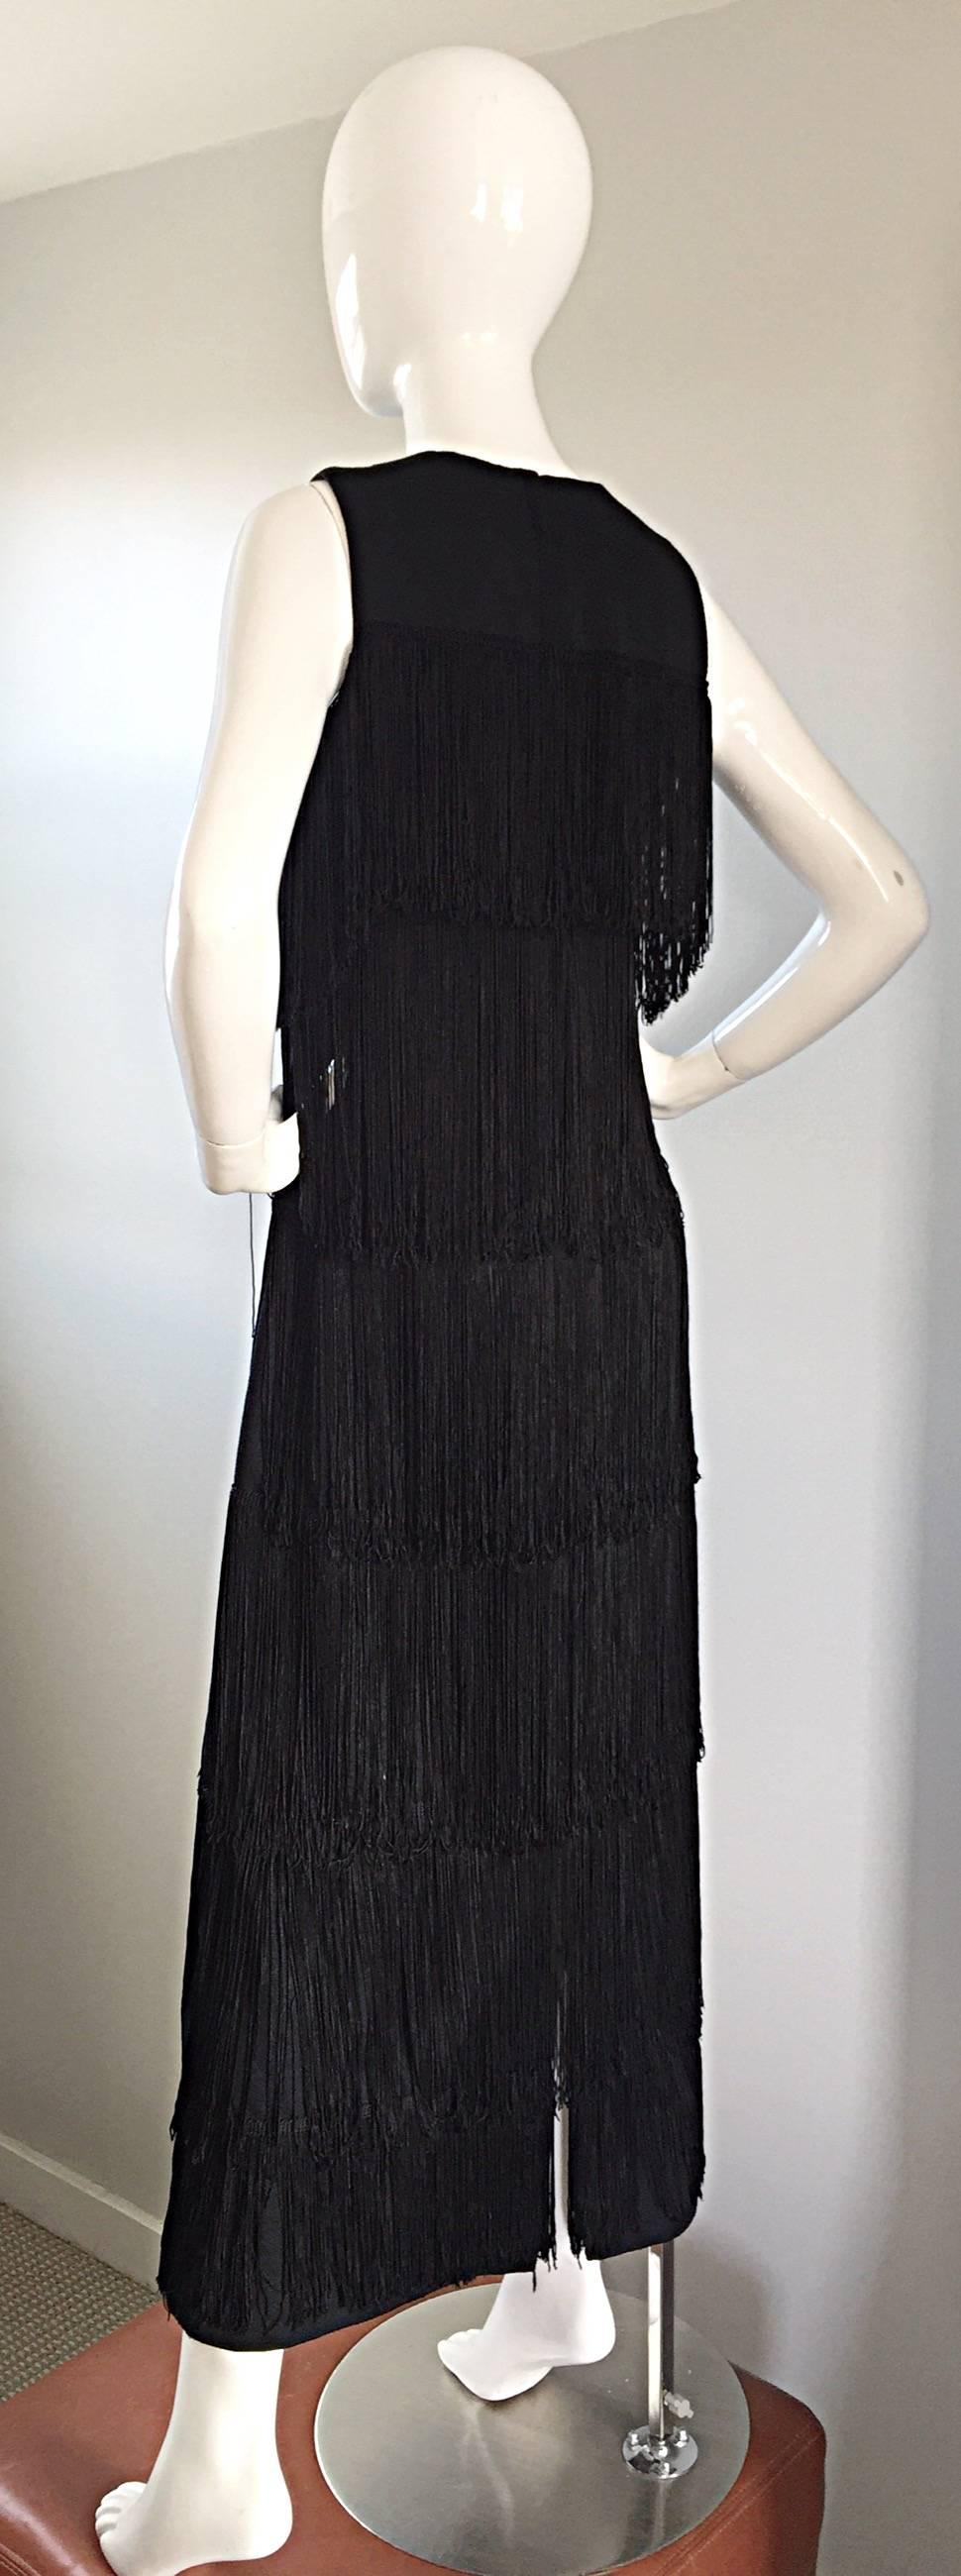 Women's 1960s Alfred Werber Black Fully Fringed Crepe Full Length Vintage Dress / Gown